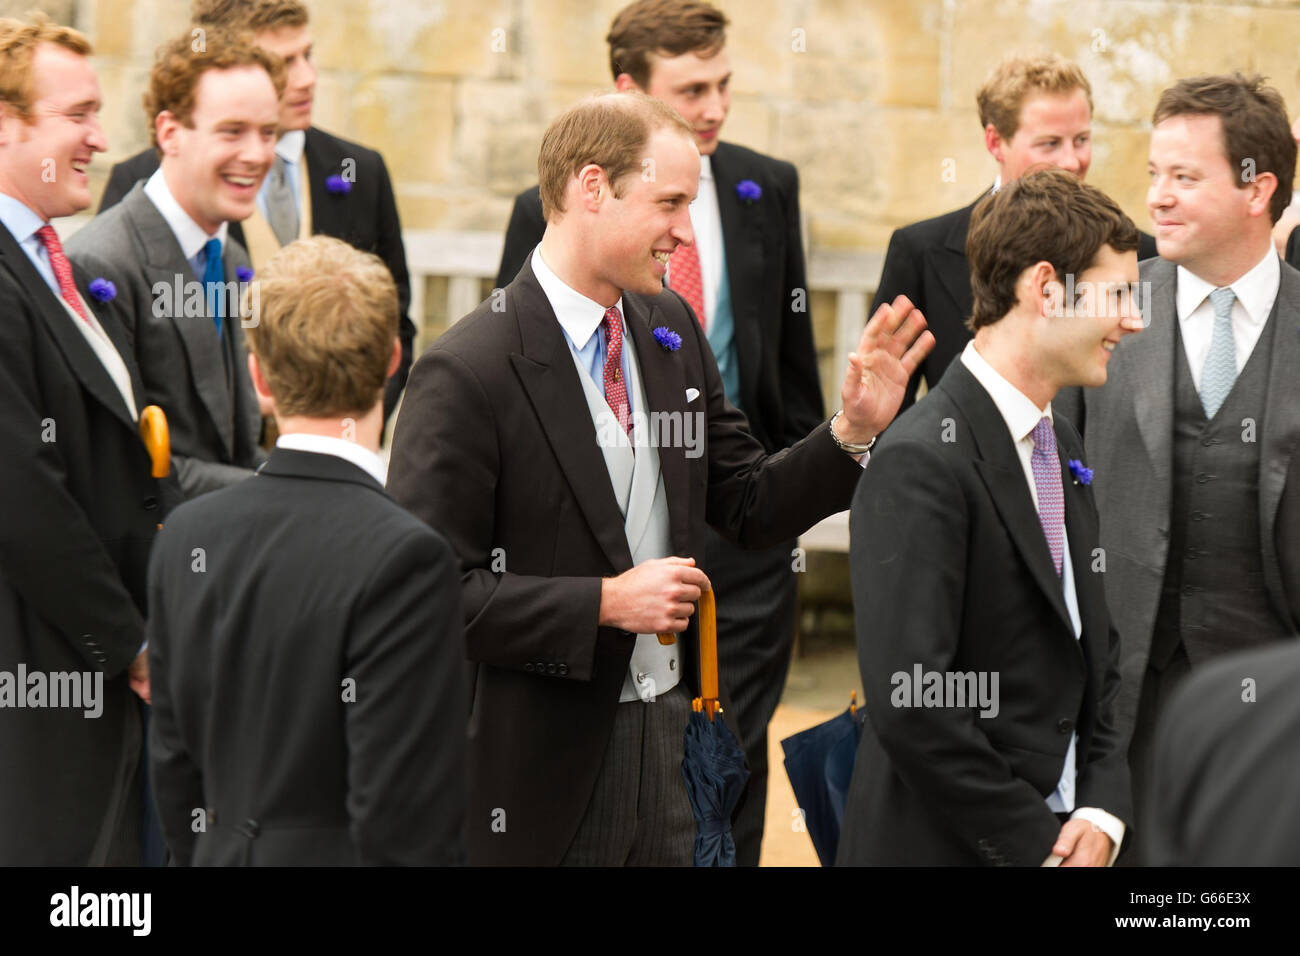 The Duke of Cambridge at the wedding of Lady Melissa Percy to Thomas van Straubenzee at St Michael's Parish Church in Alnwick. Stock Photo